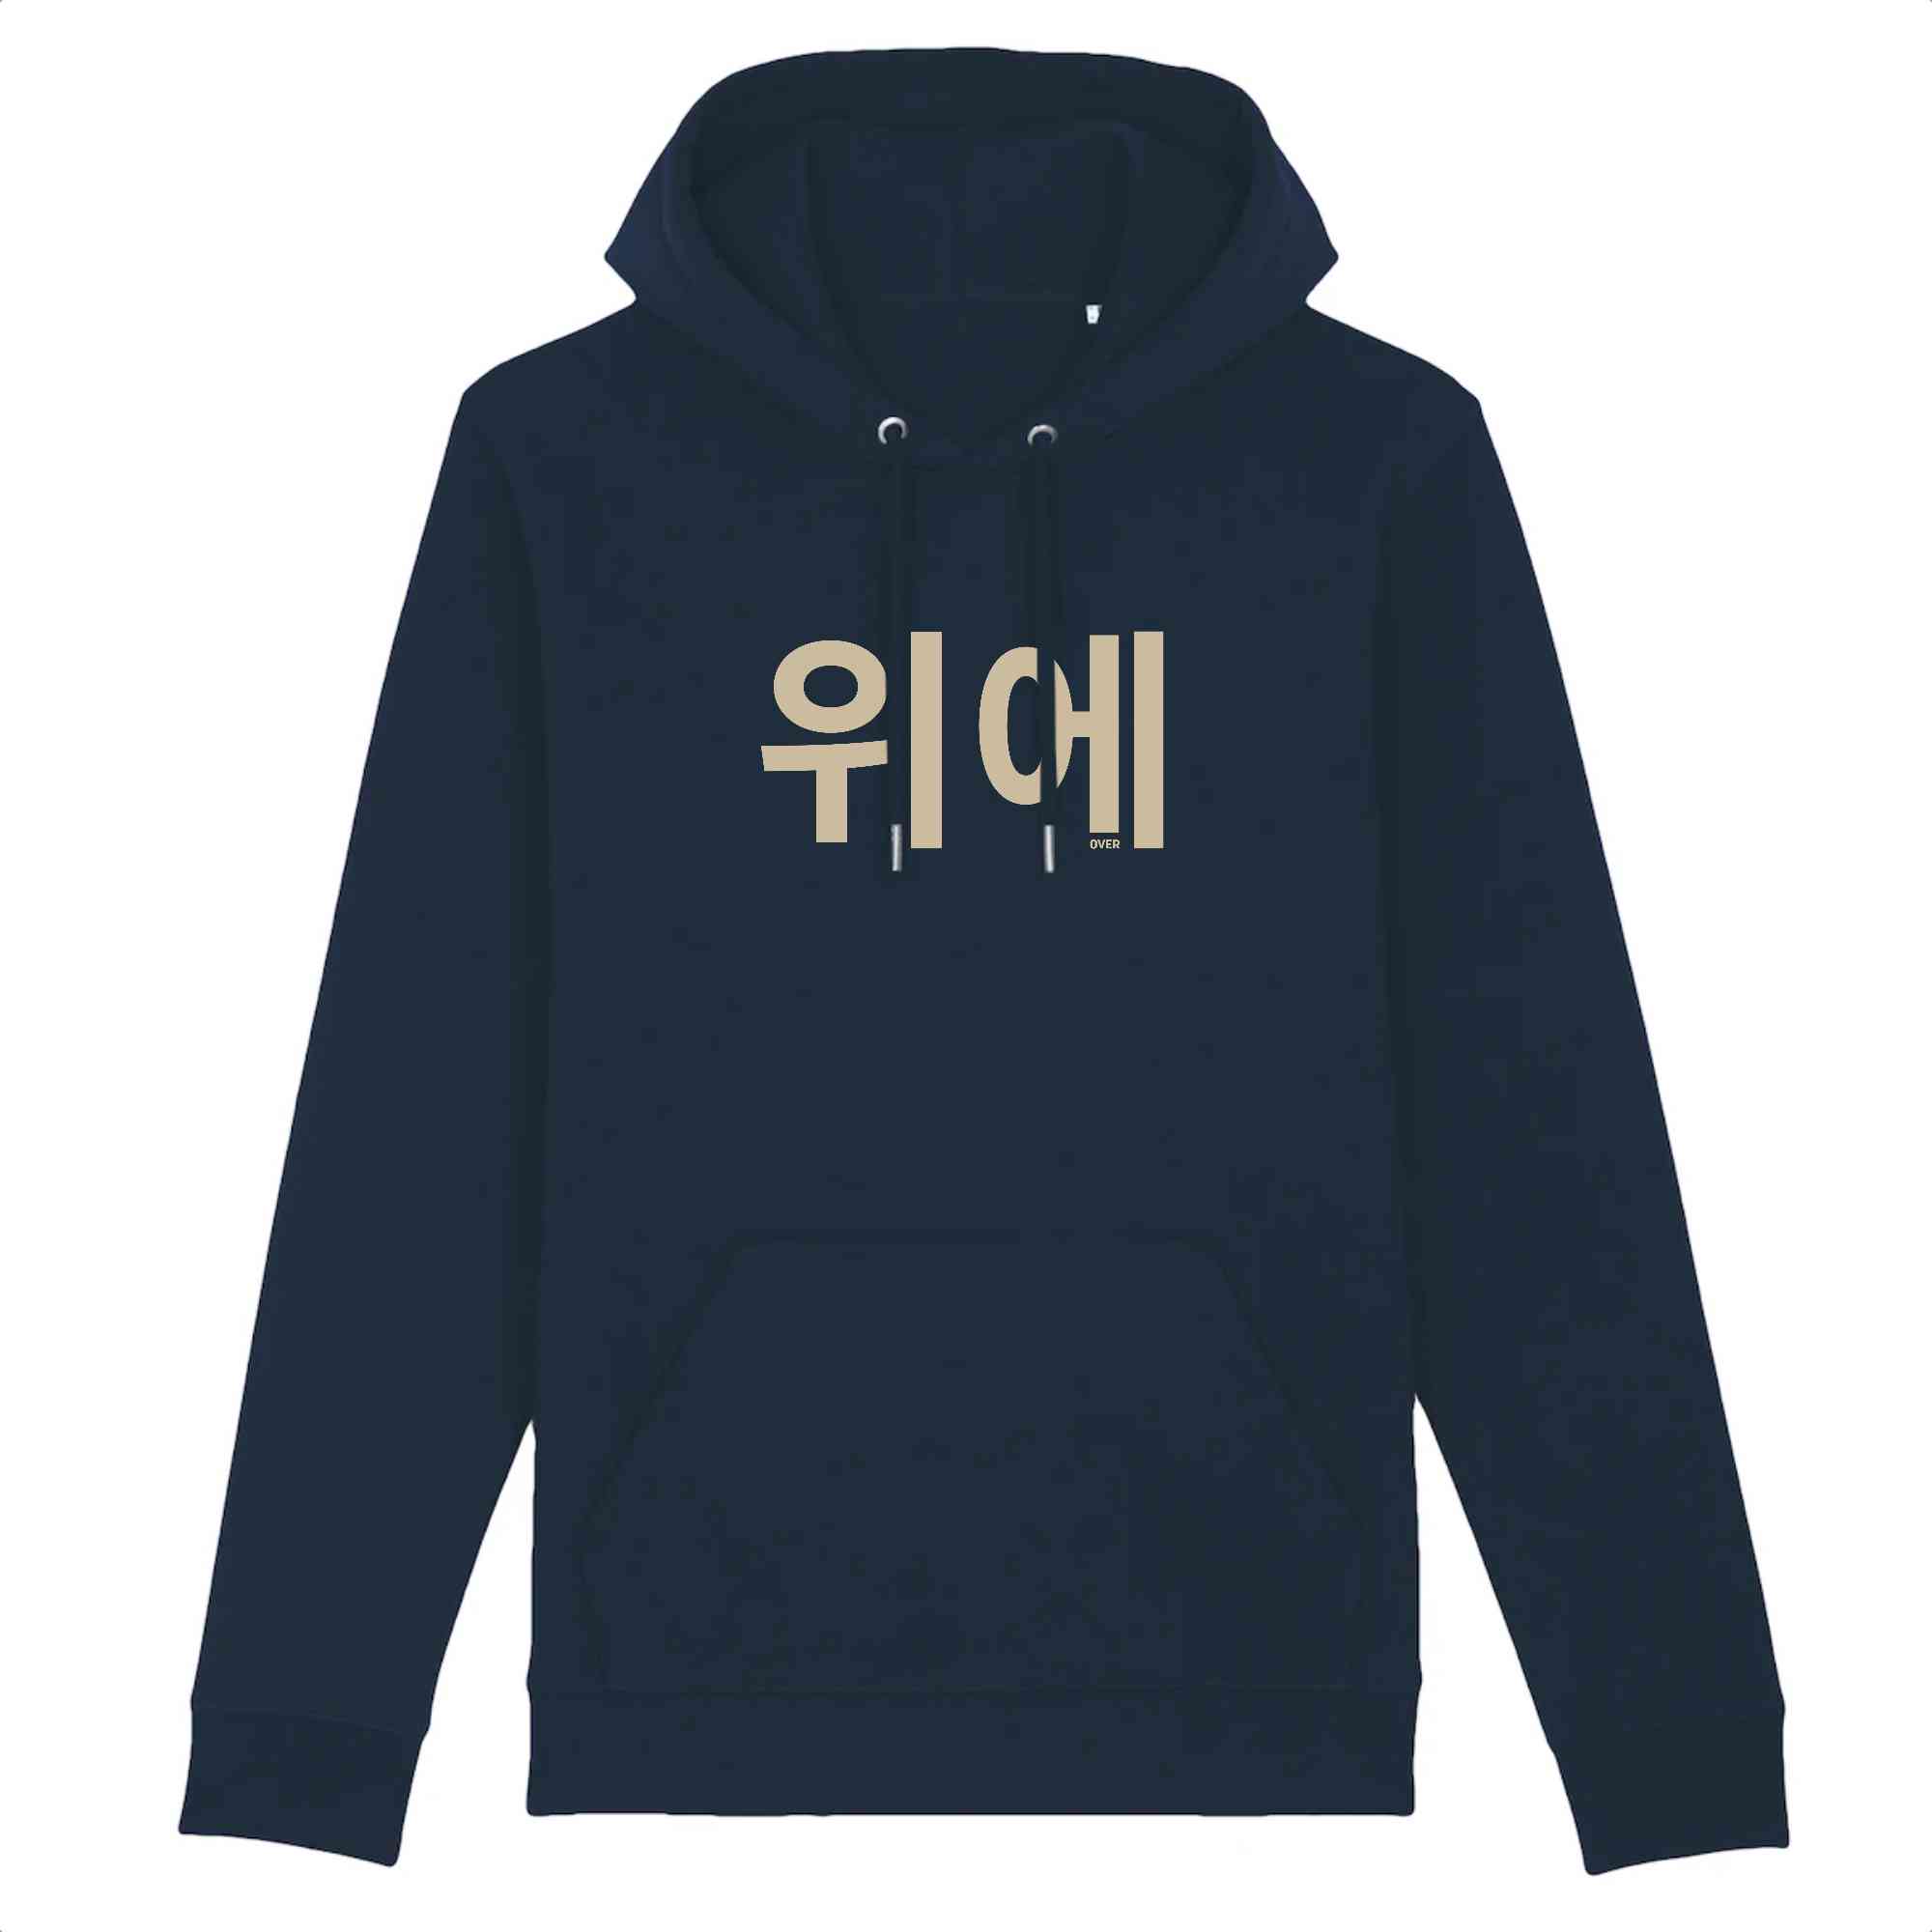 Sweat à capuche bleu marine et beige OVER en Coréen - Hoodie collection Korean